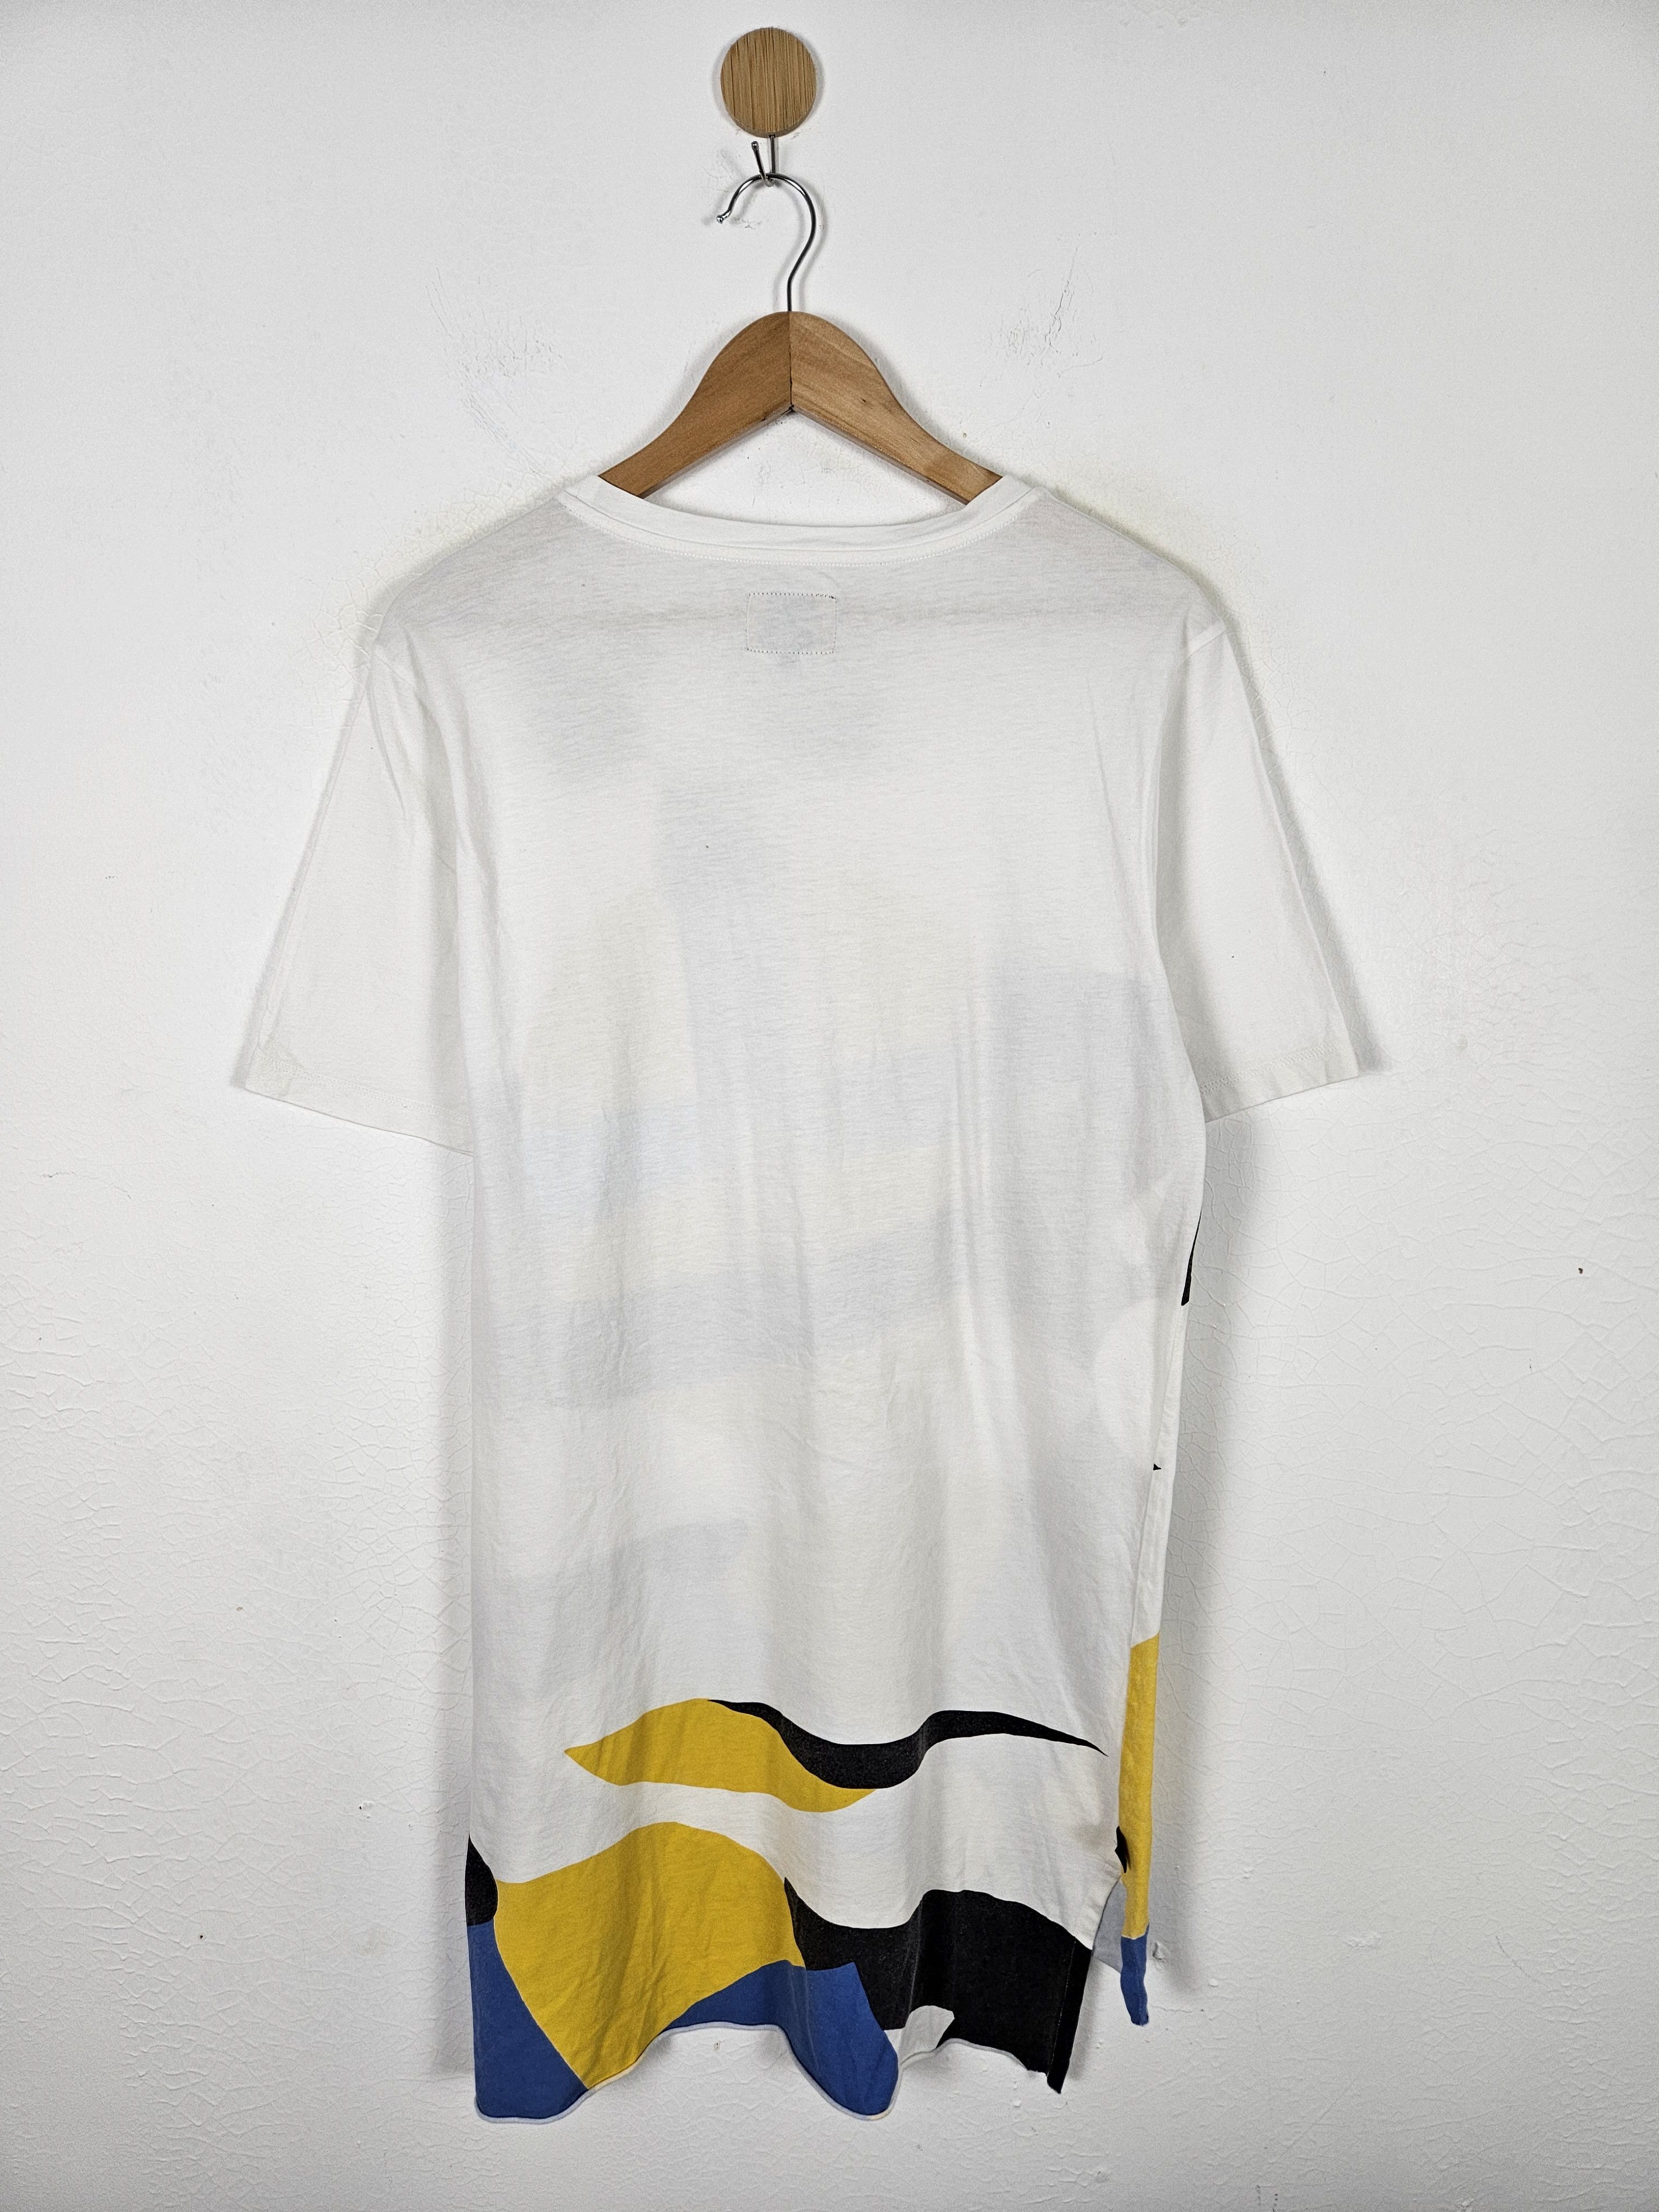 Vivienne Westwood Anglomania Orb Shirt - 3